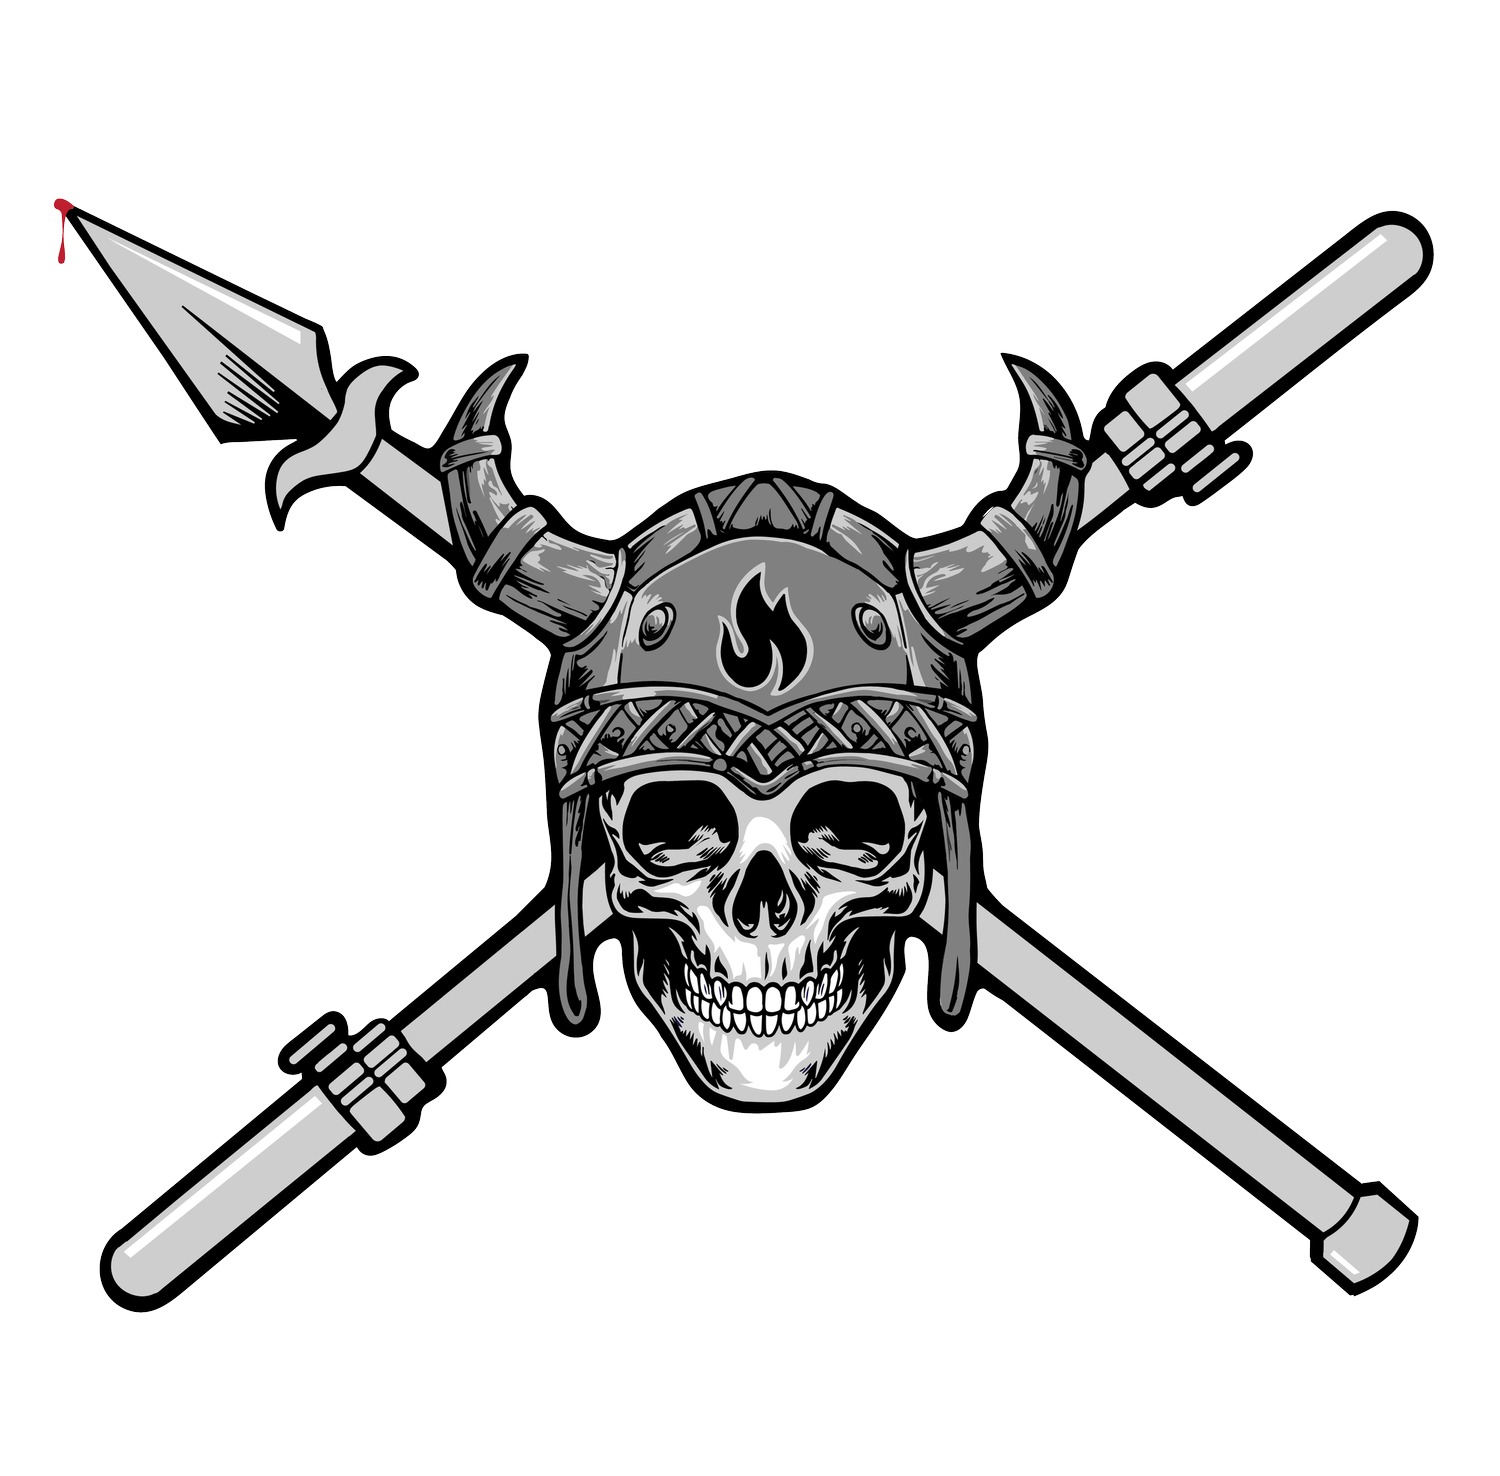 Vanguard Barbell Gym